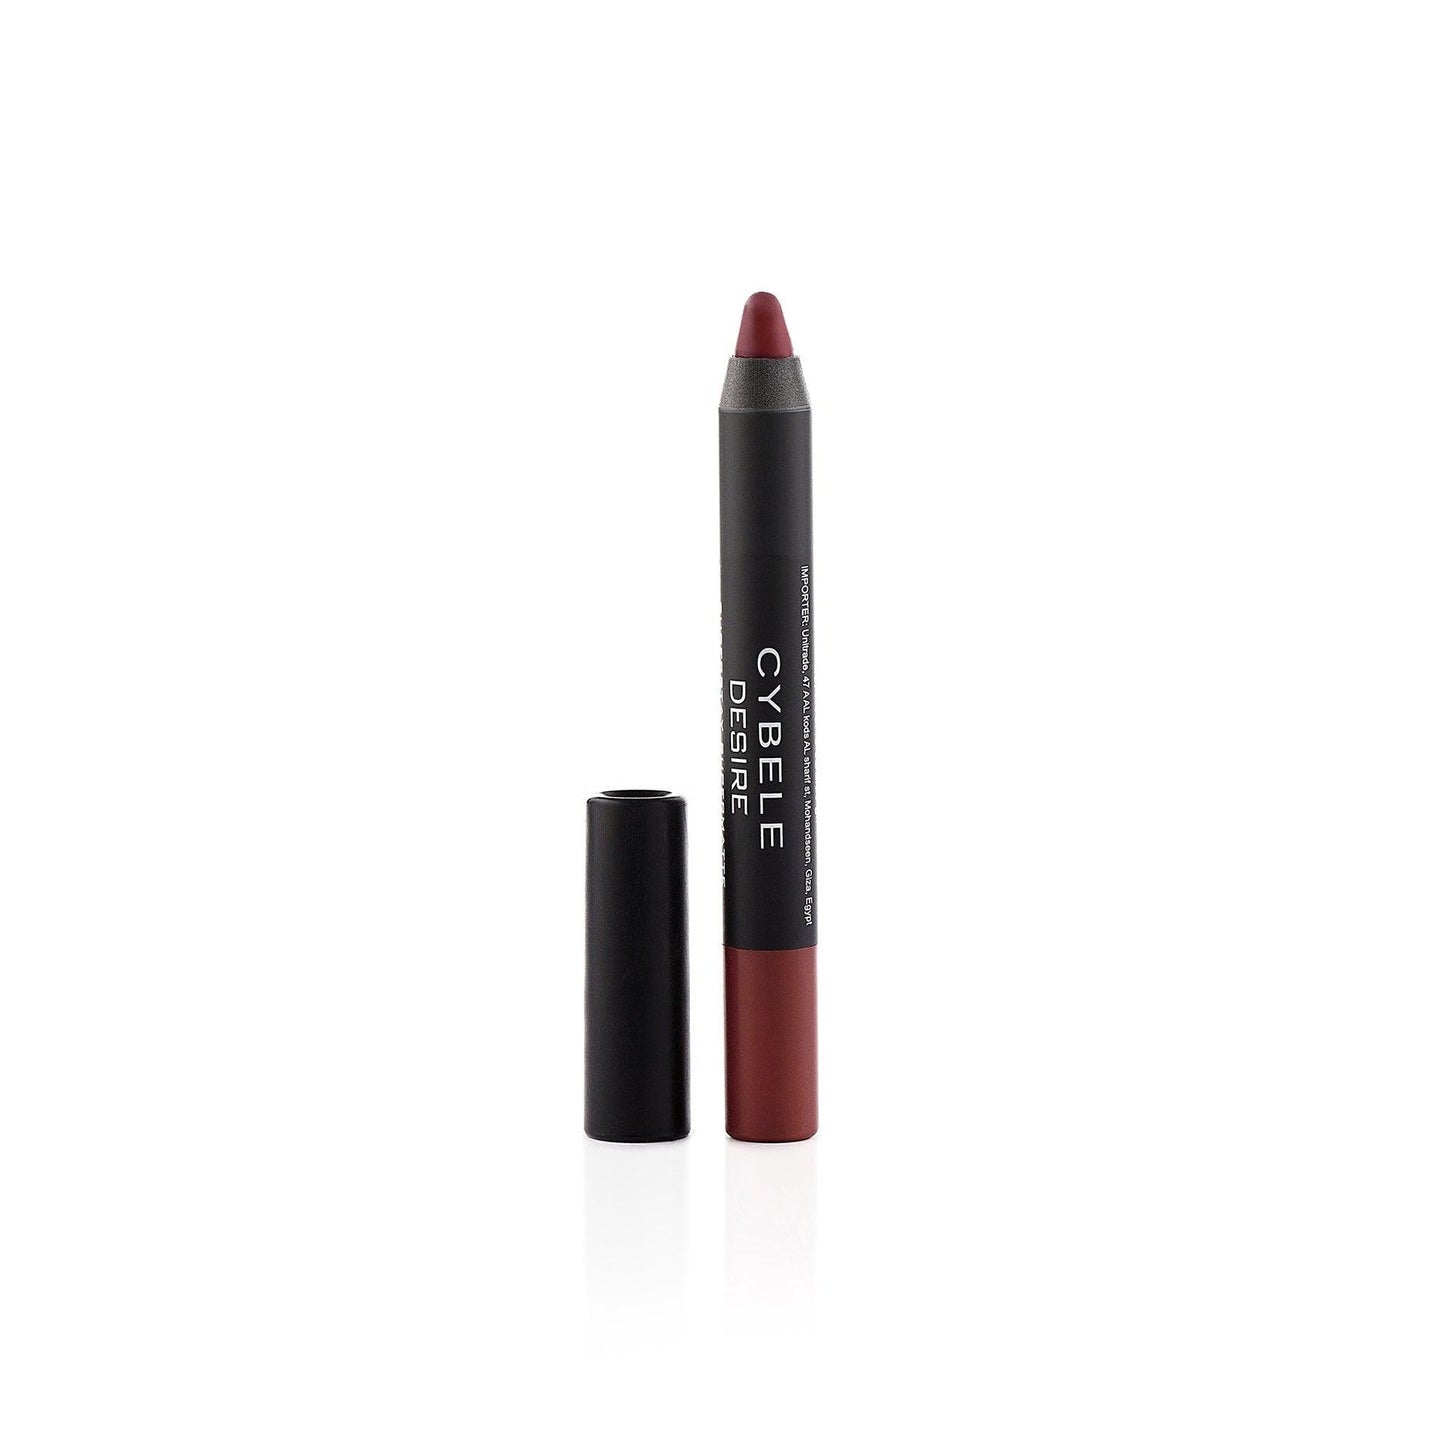 Cybele Desire lipstick pencil DARK MAGENTA 07 - Beauty Bounty